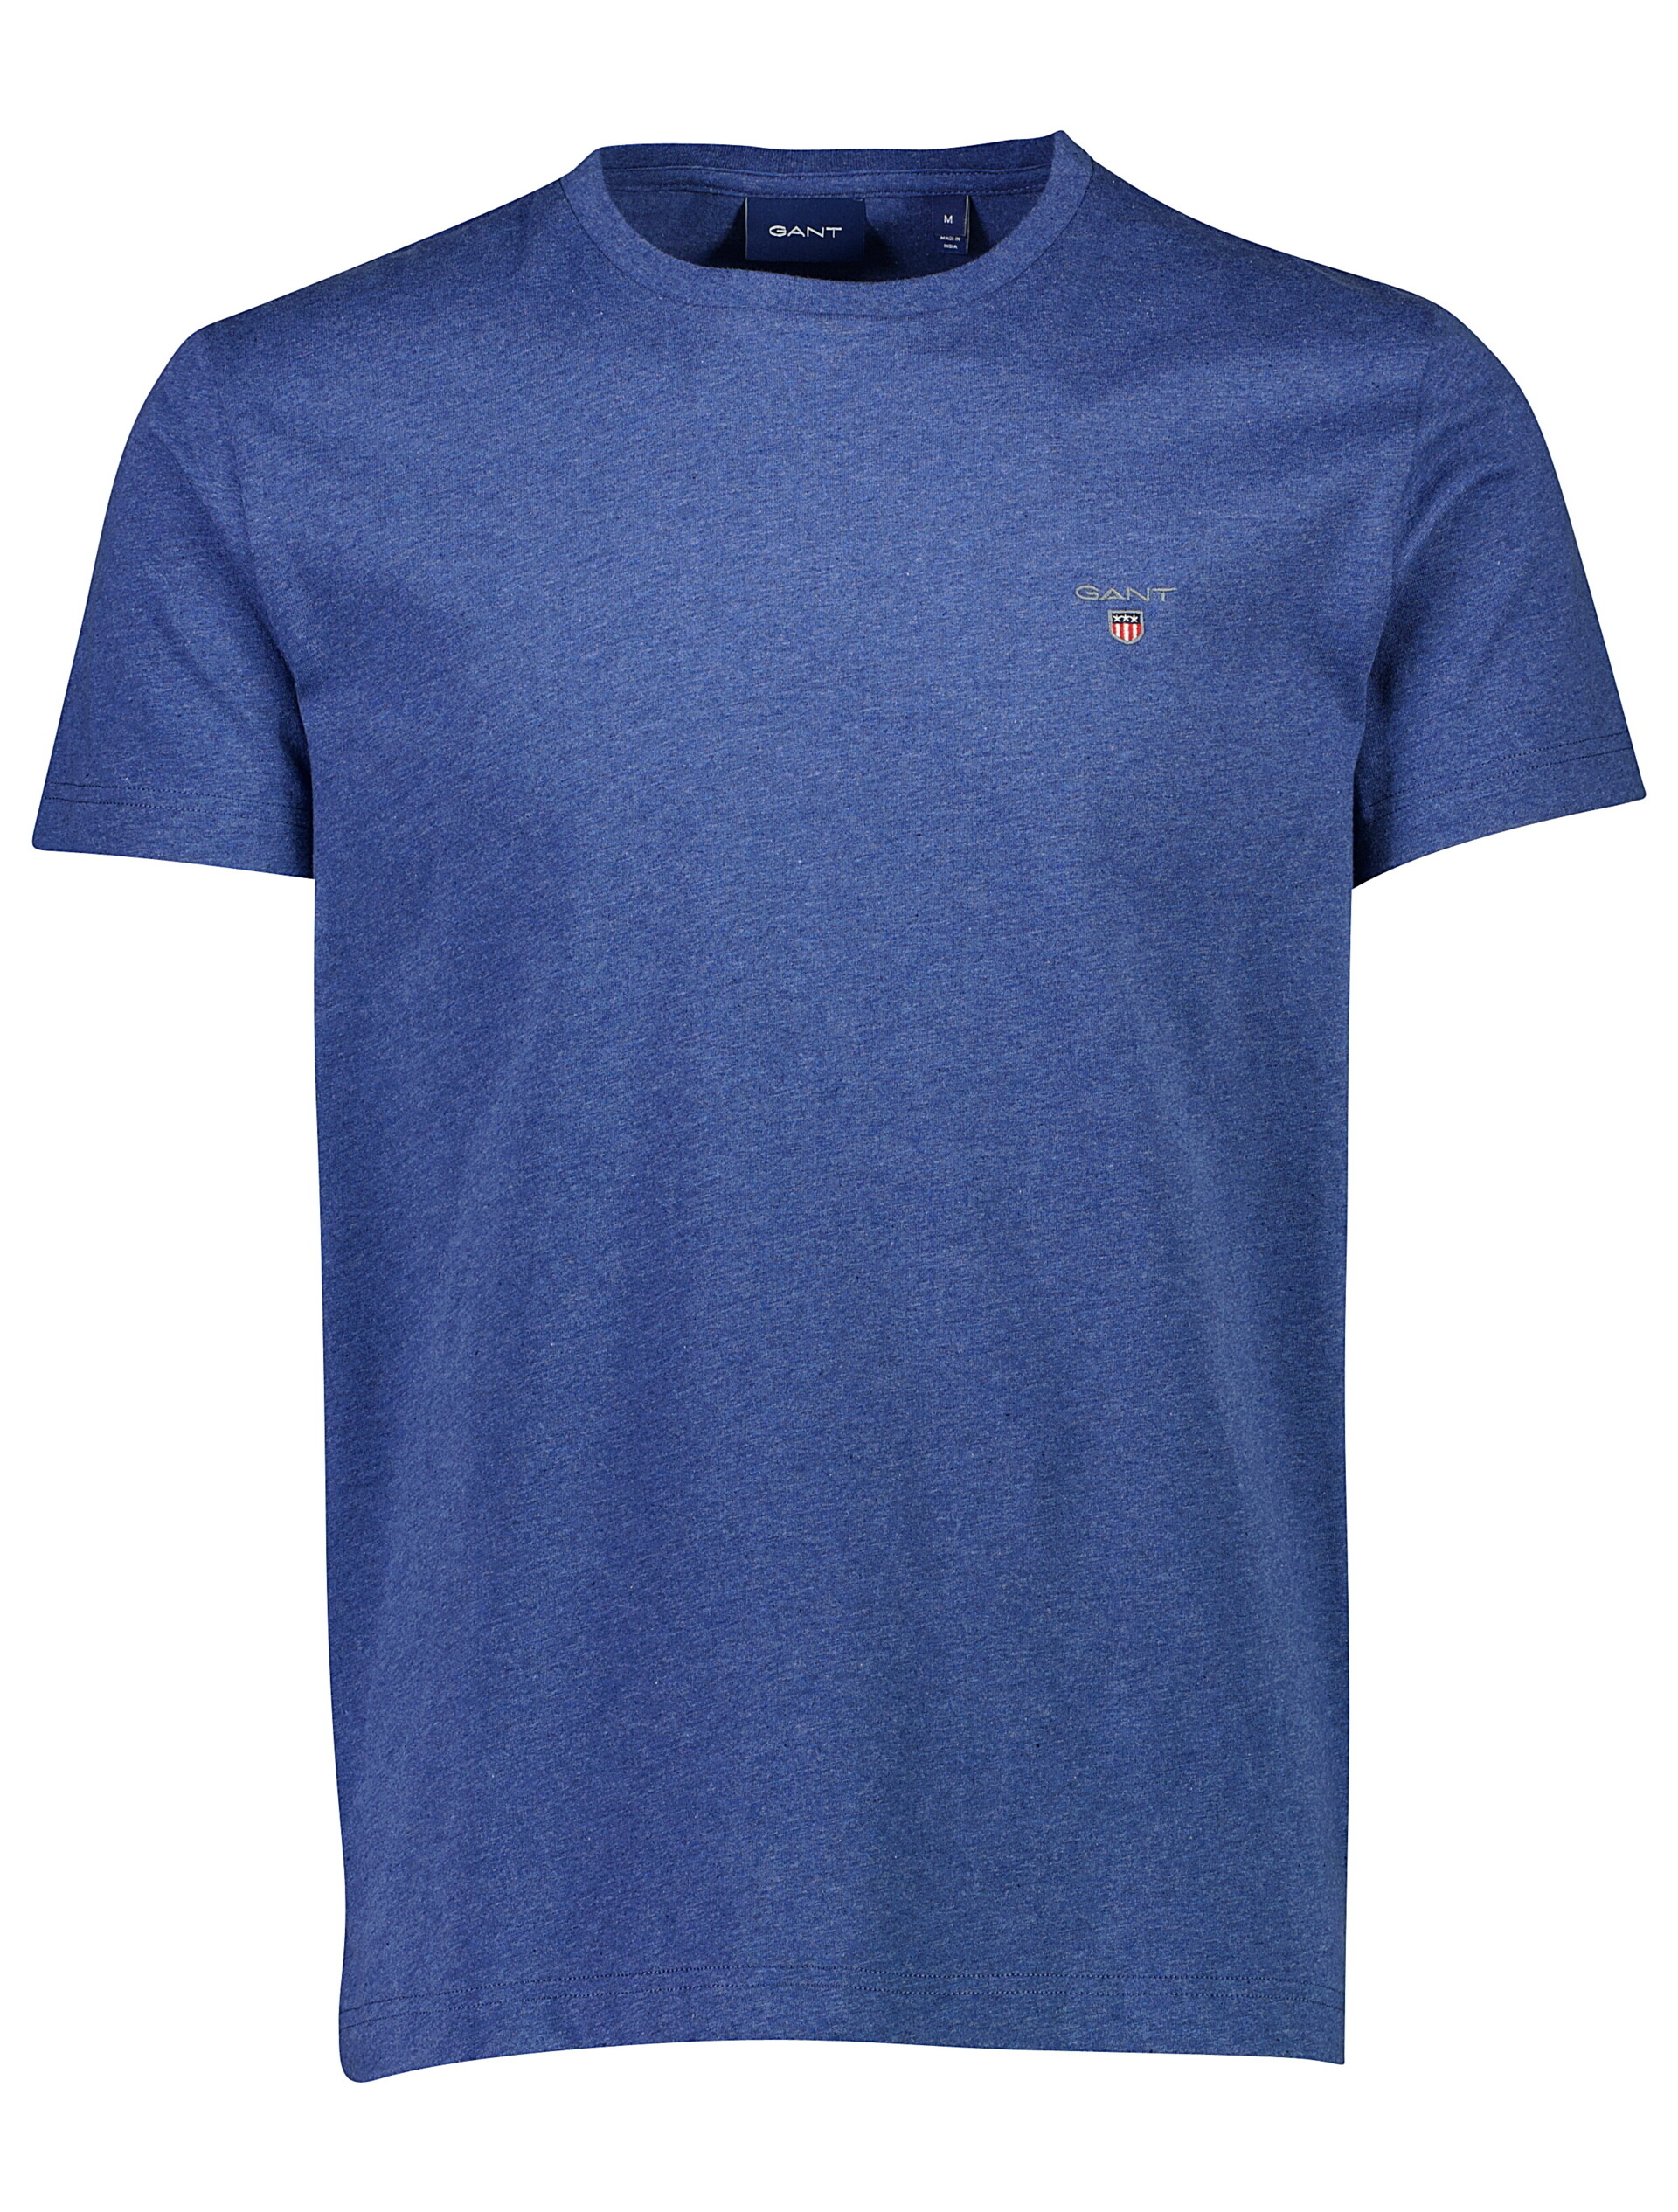 Gant T-shirt blå / 487 marine mel